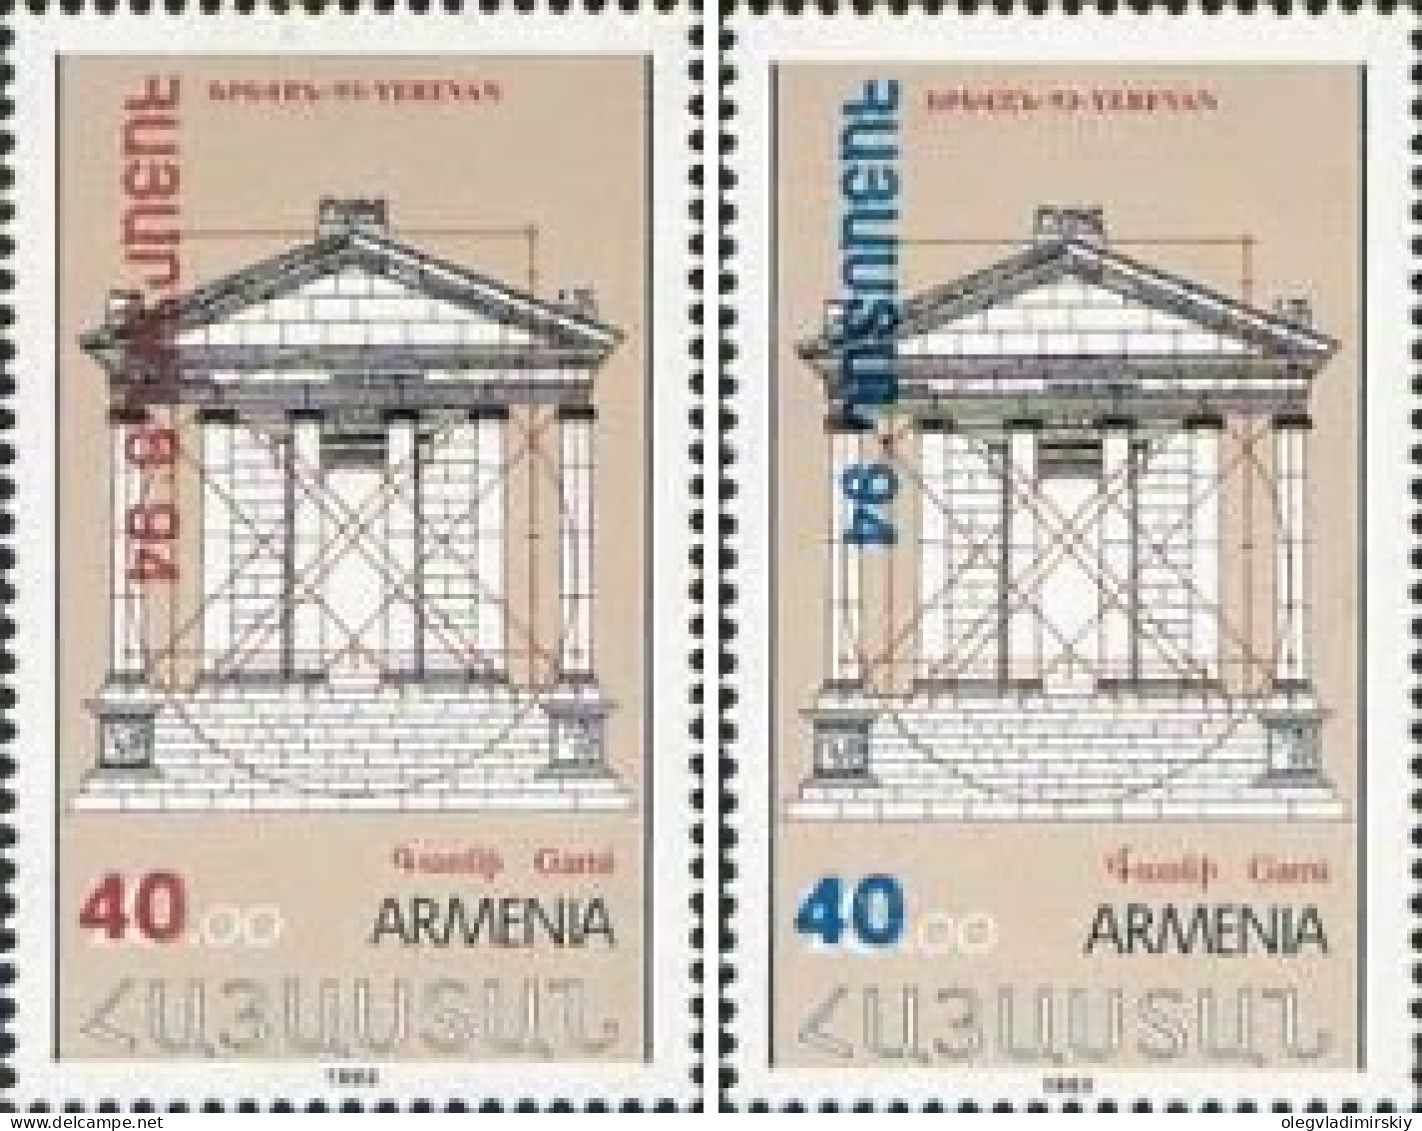 Armenia 1994 Philatelic Exhibition Erevan-94 Set Of 2 Stamps With Overprints Mint - Esposizioni Filateliche